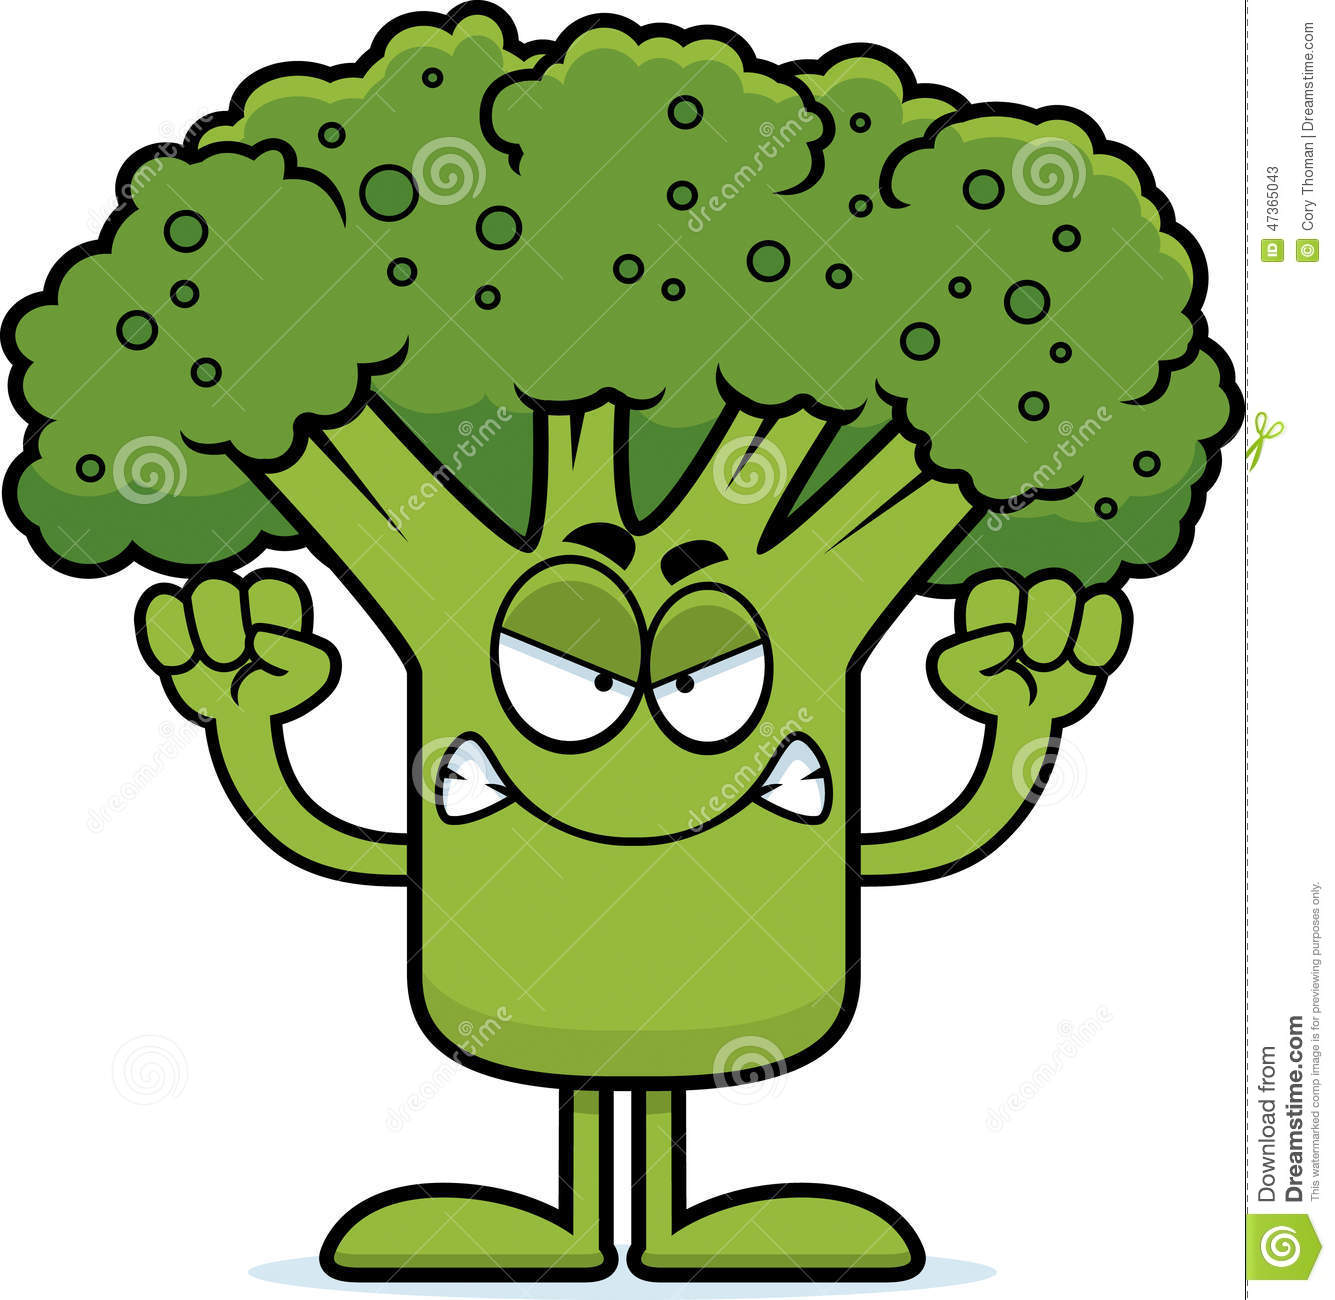 Broccoli clipart happy, Broccoli happy Transparent FREE for